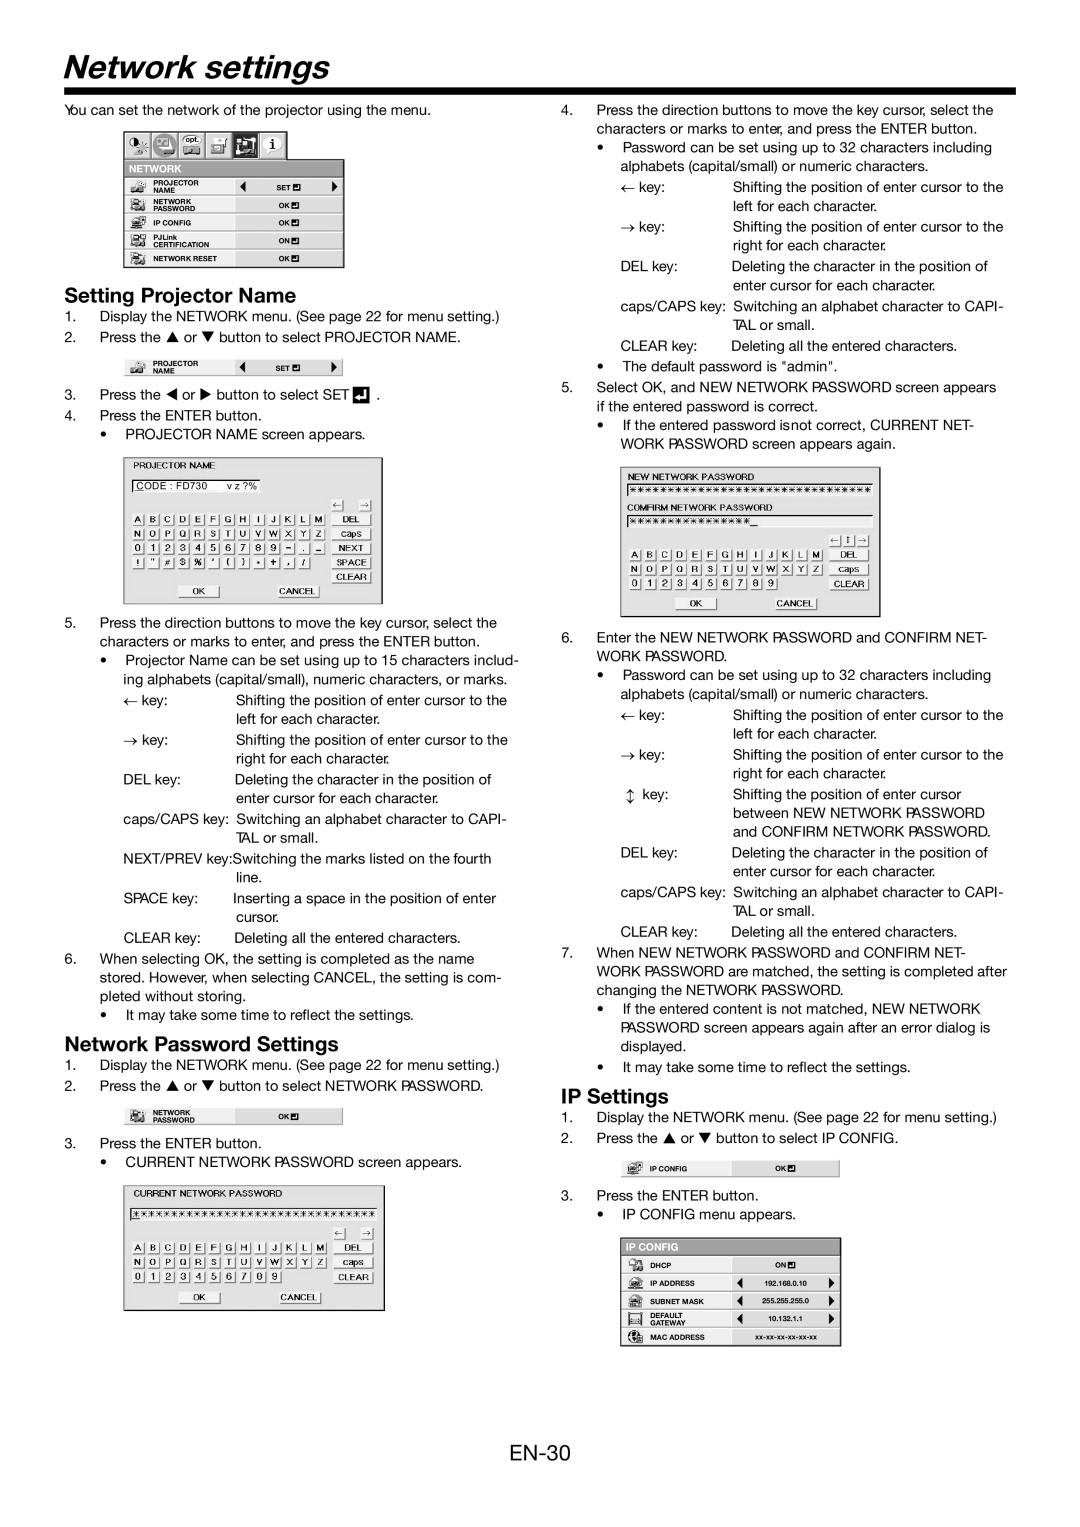 Mitsubishi Electronics FD730U-G Network settings, EN-30, Setting Projector Name, Network Password Settings, IP Settings 